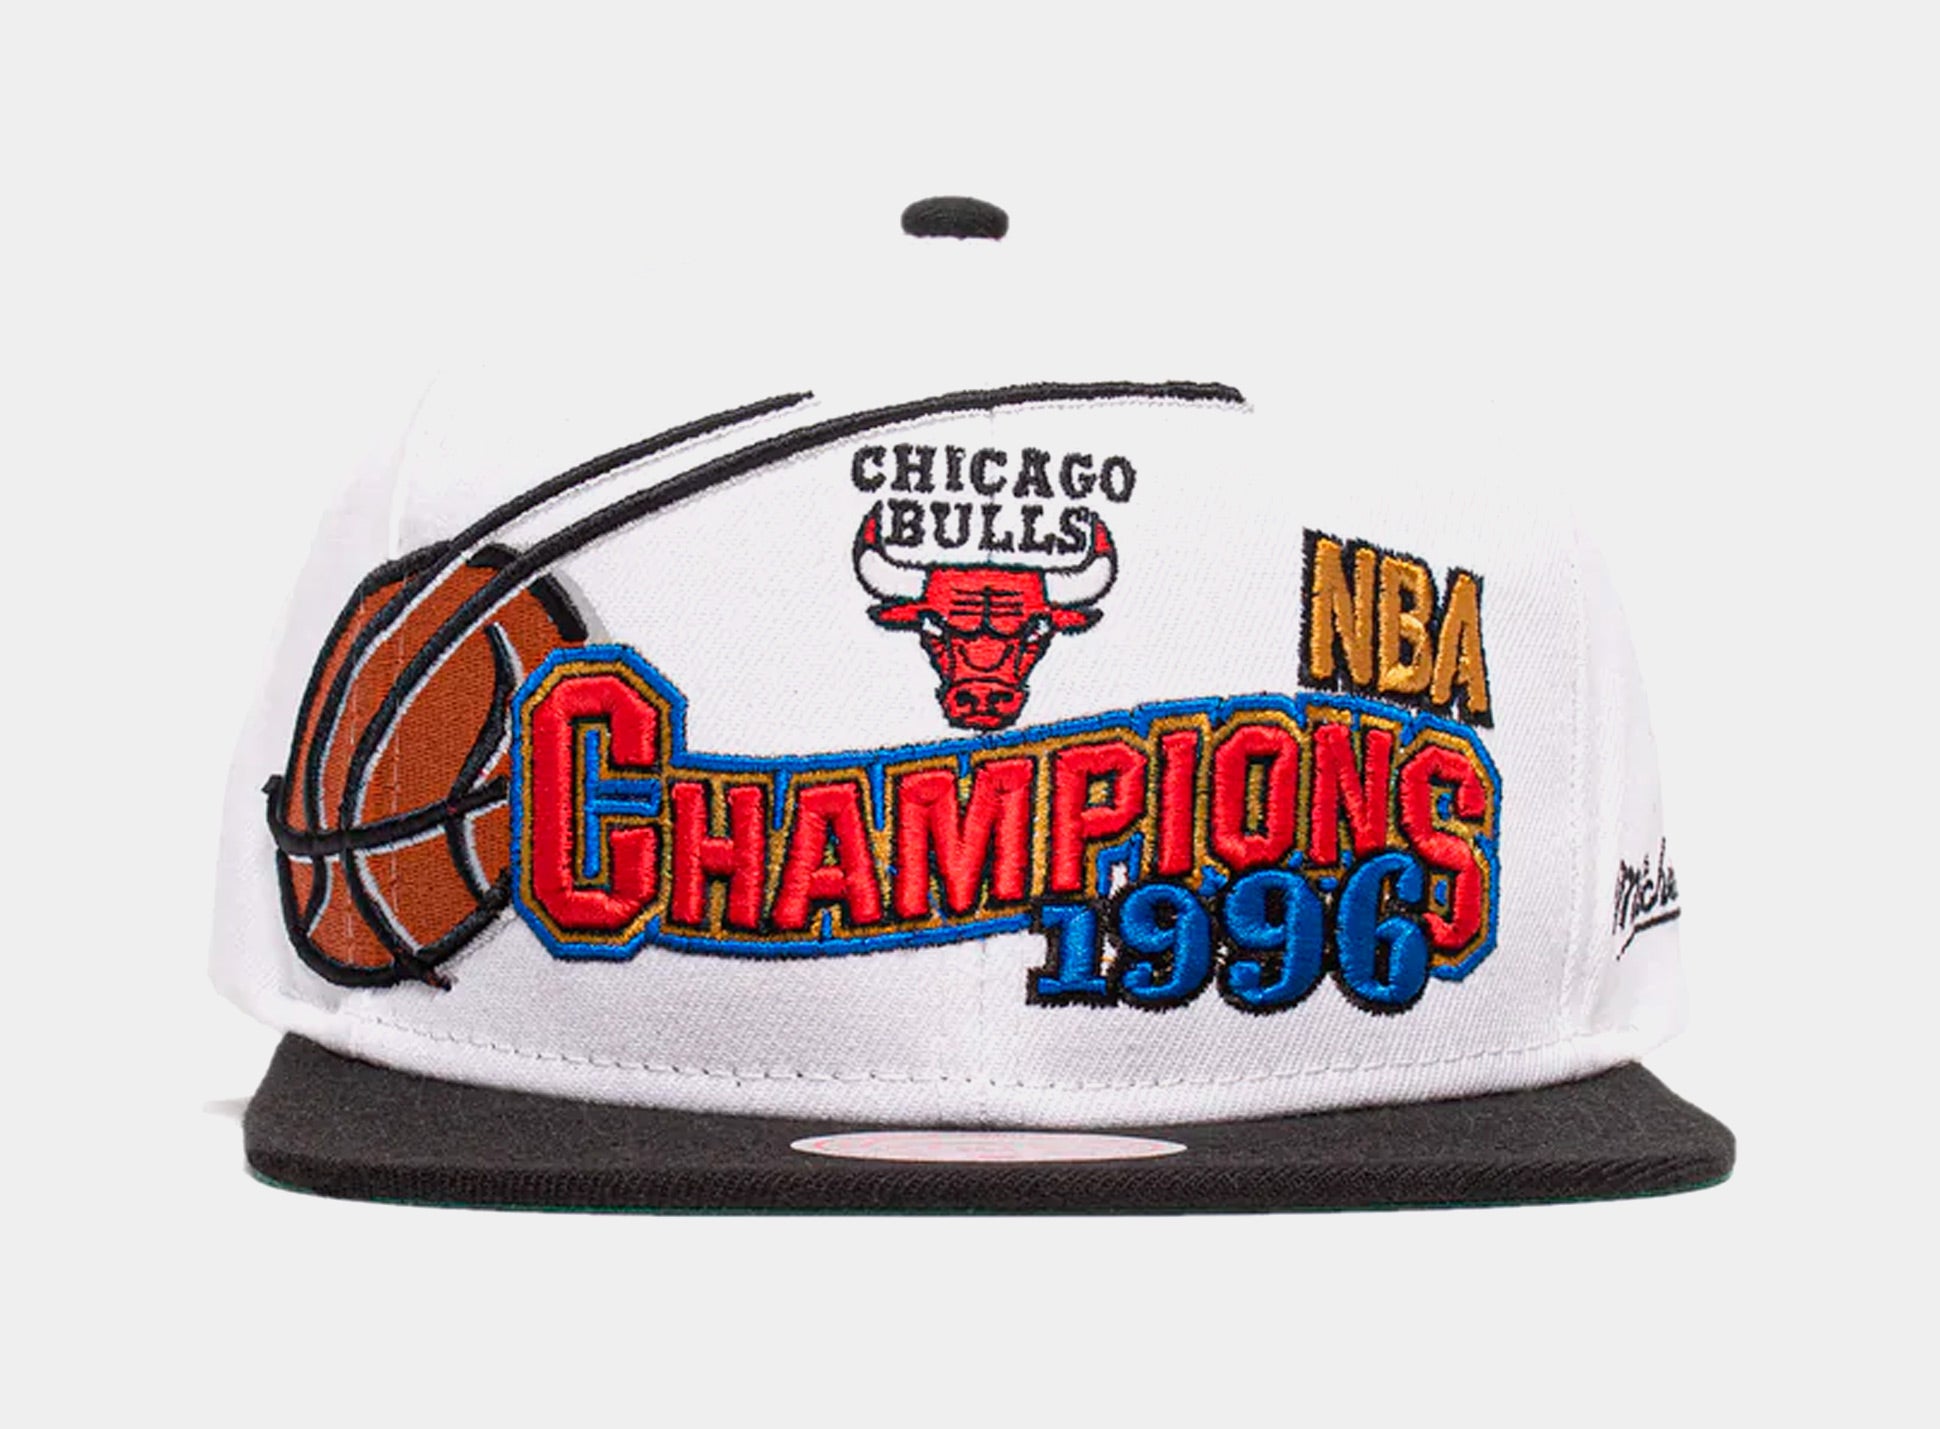 Chicago Bulls 6 Times Crew Sweatshirt by Mitchell & Ness - Black - Mens